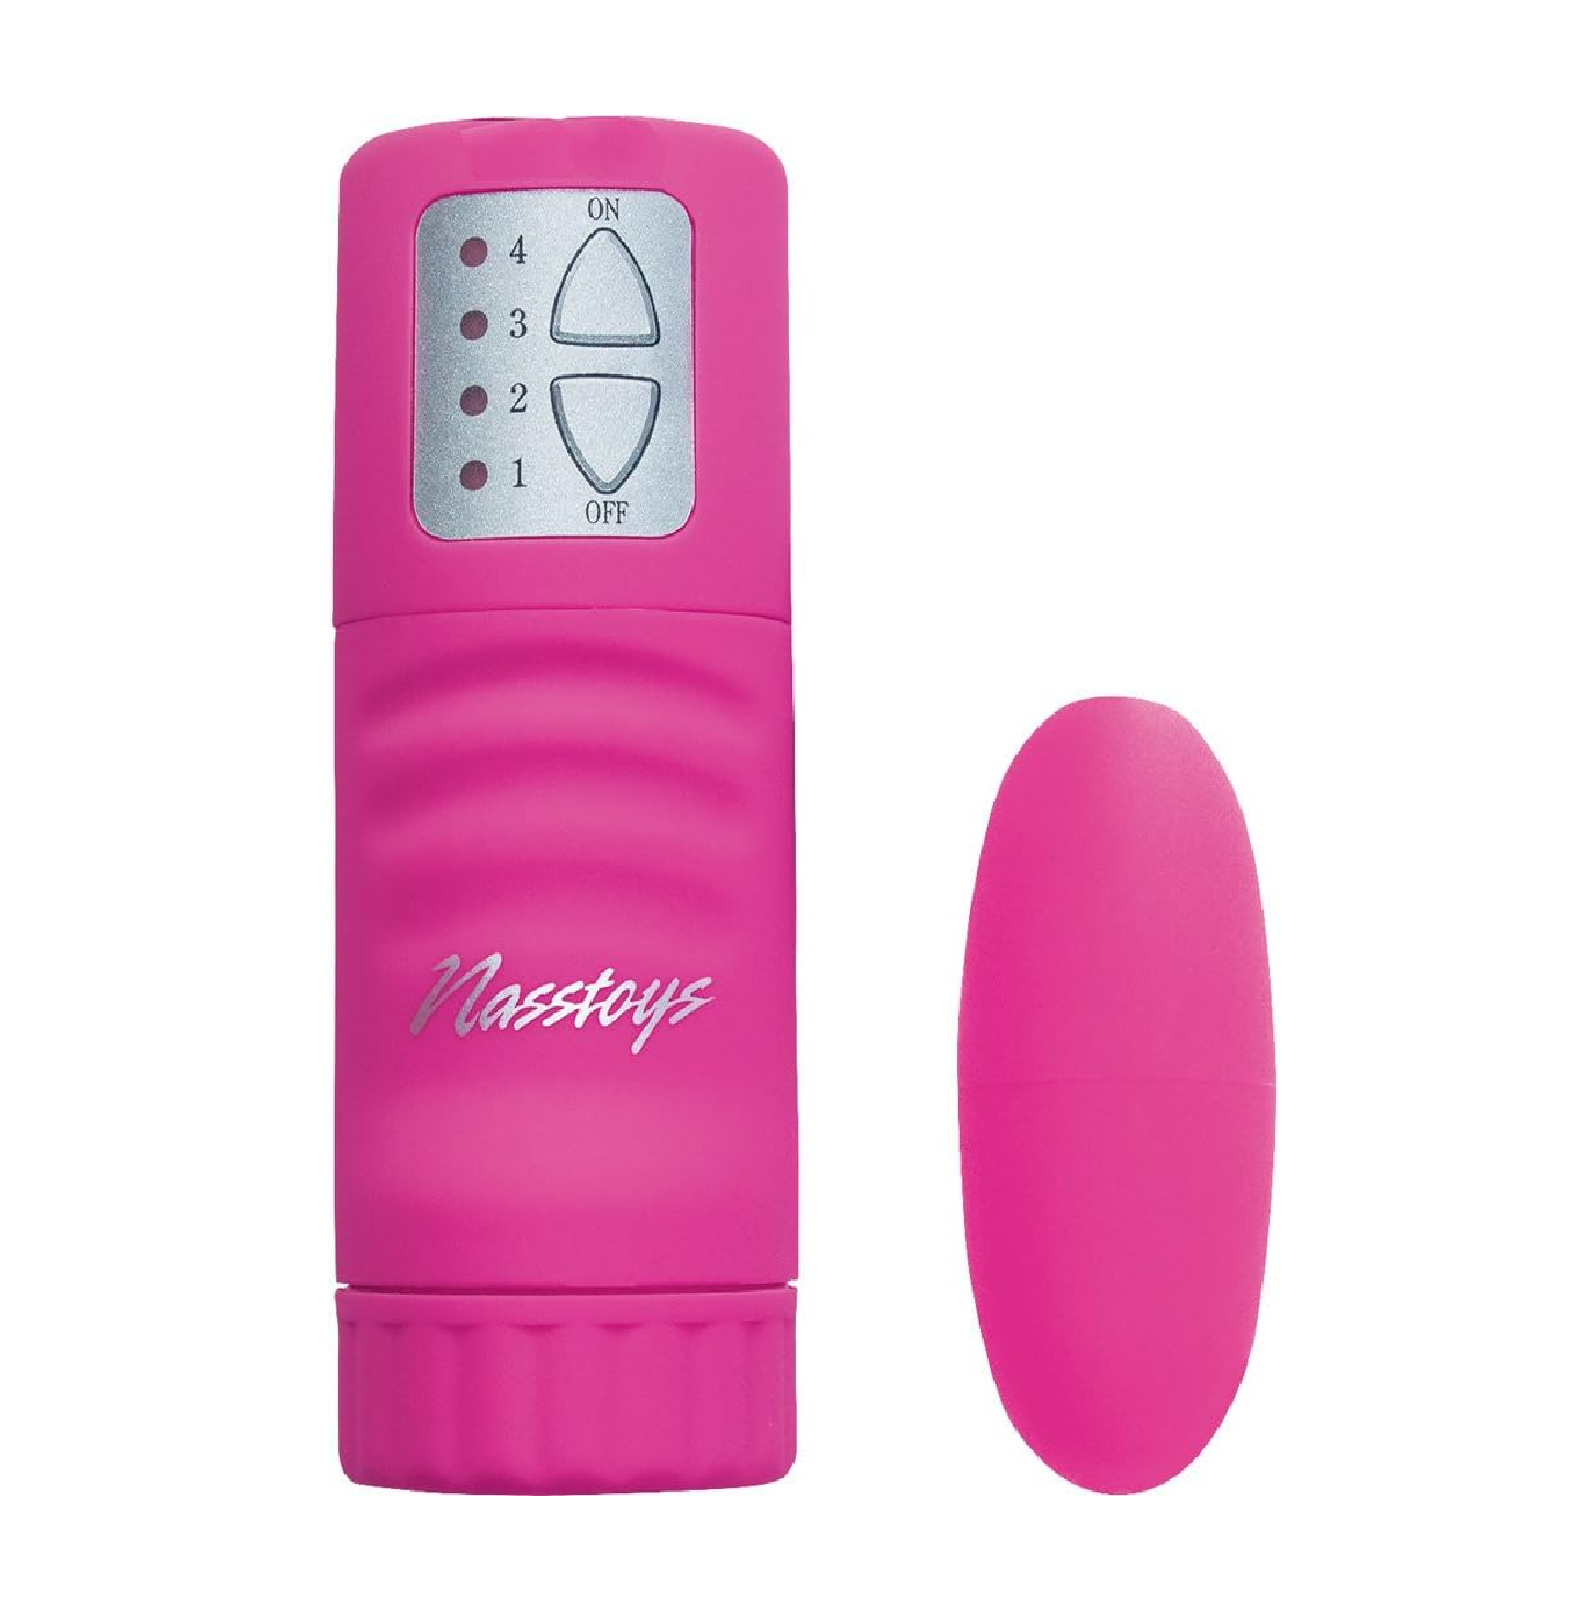 Seduce Me with Ultimate Pleasure 4-Speed Egg Vibrator - Pink